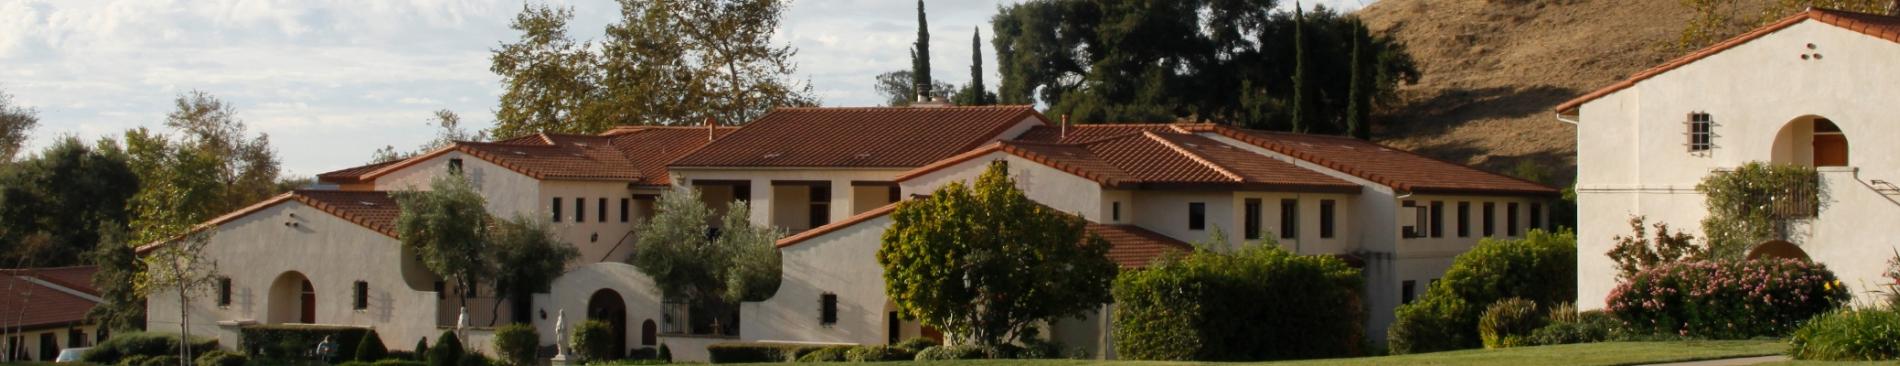 California residence halls